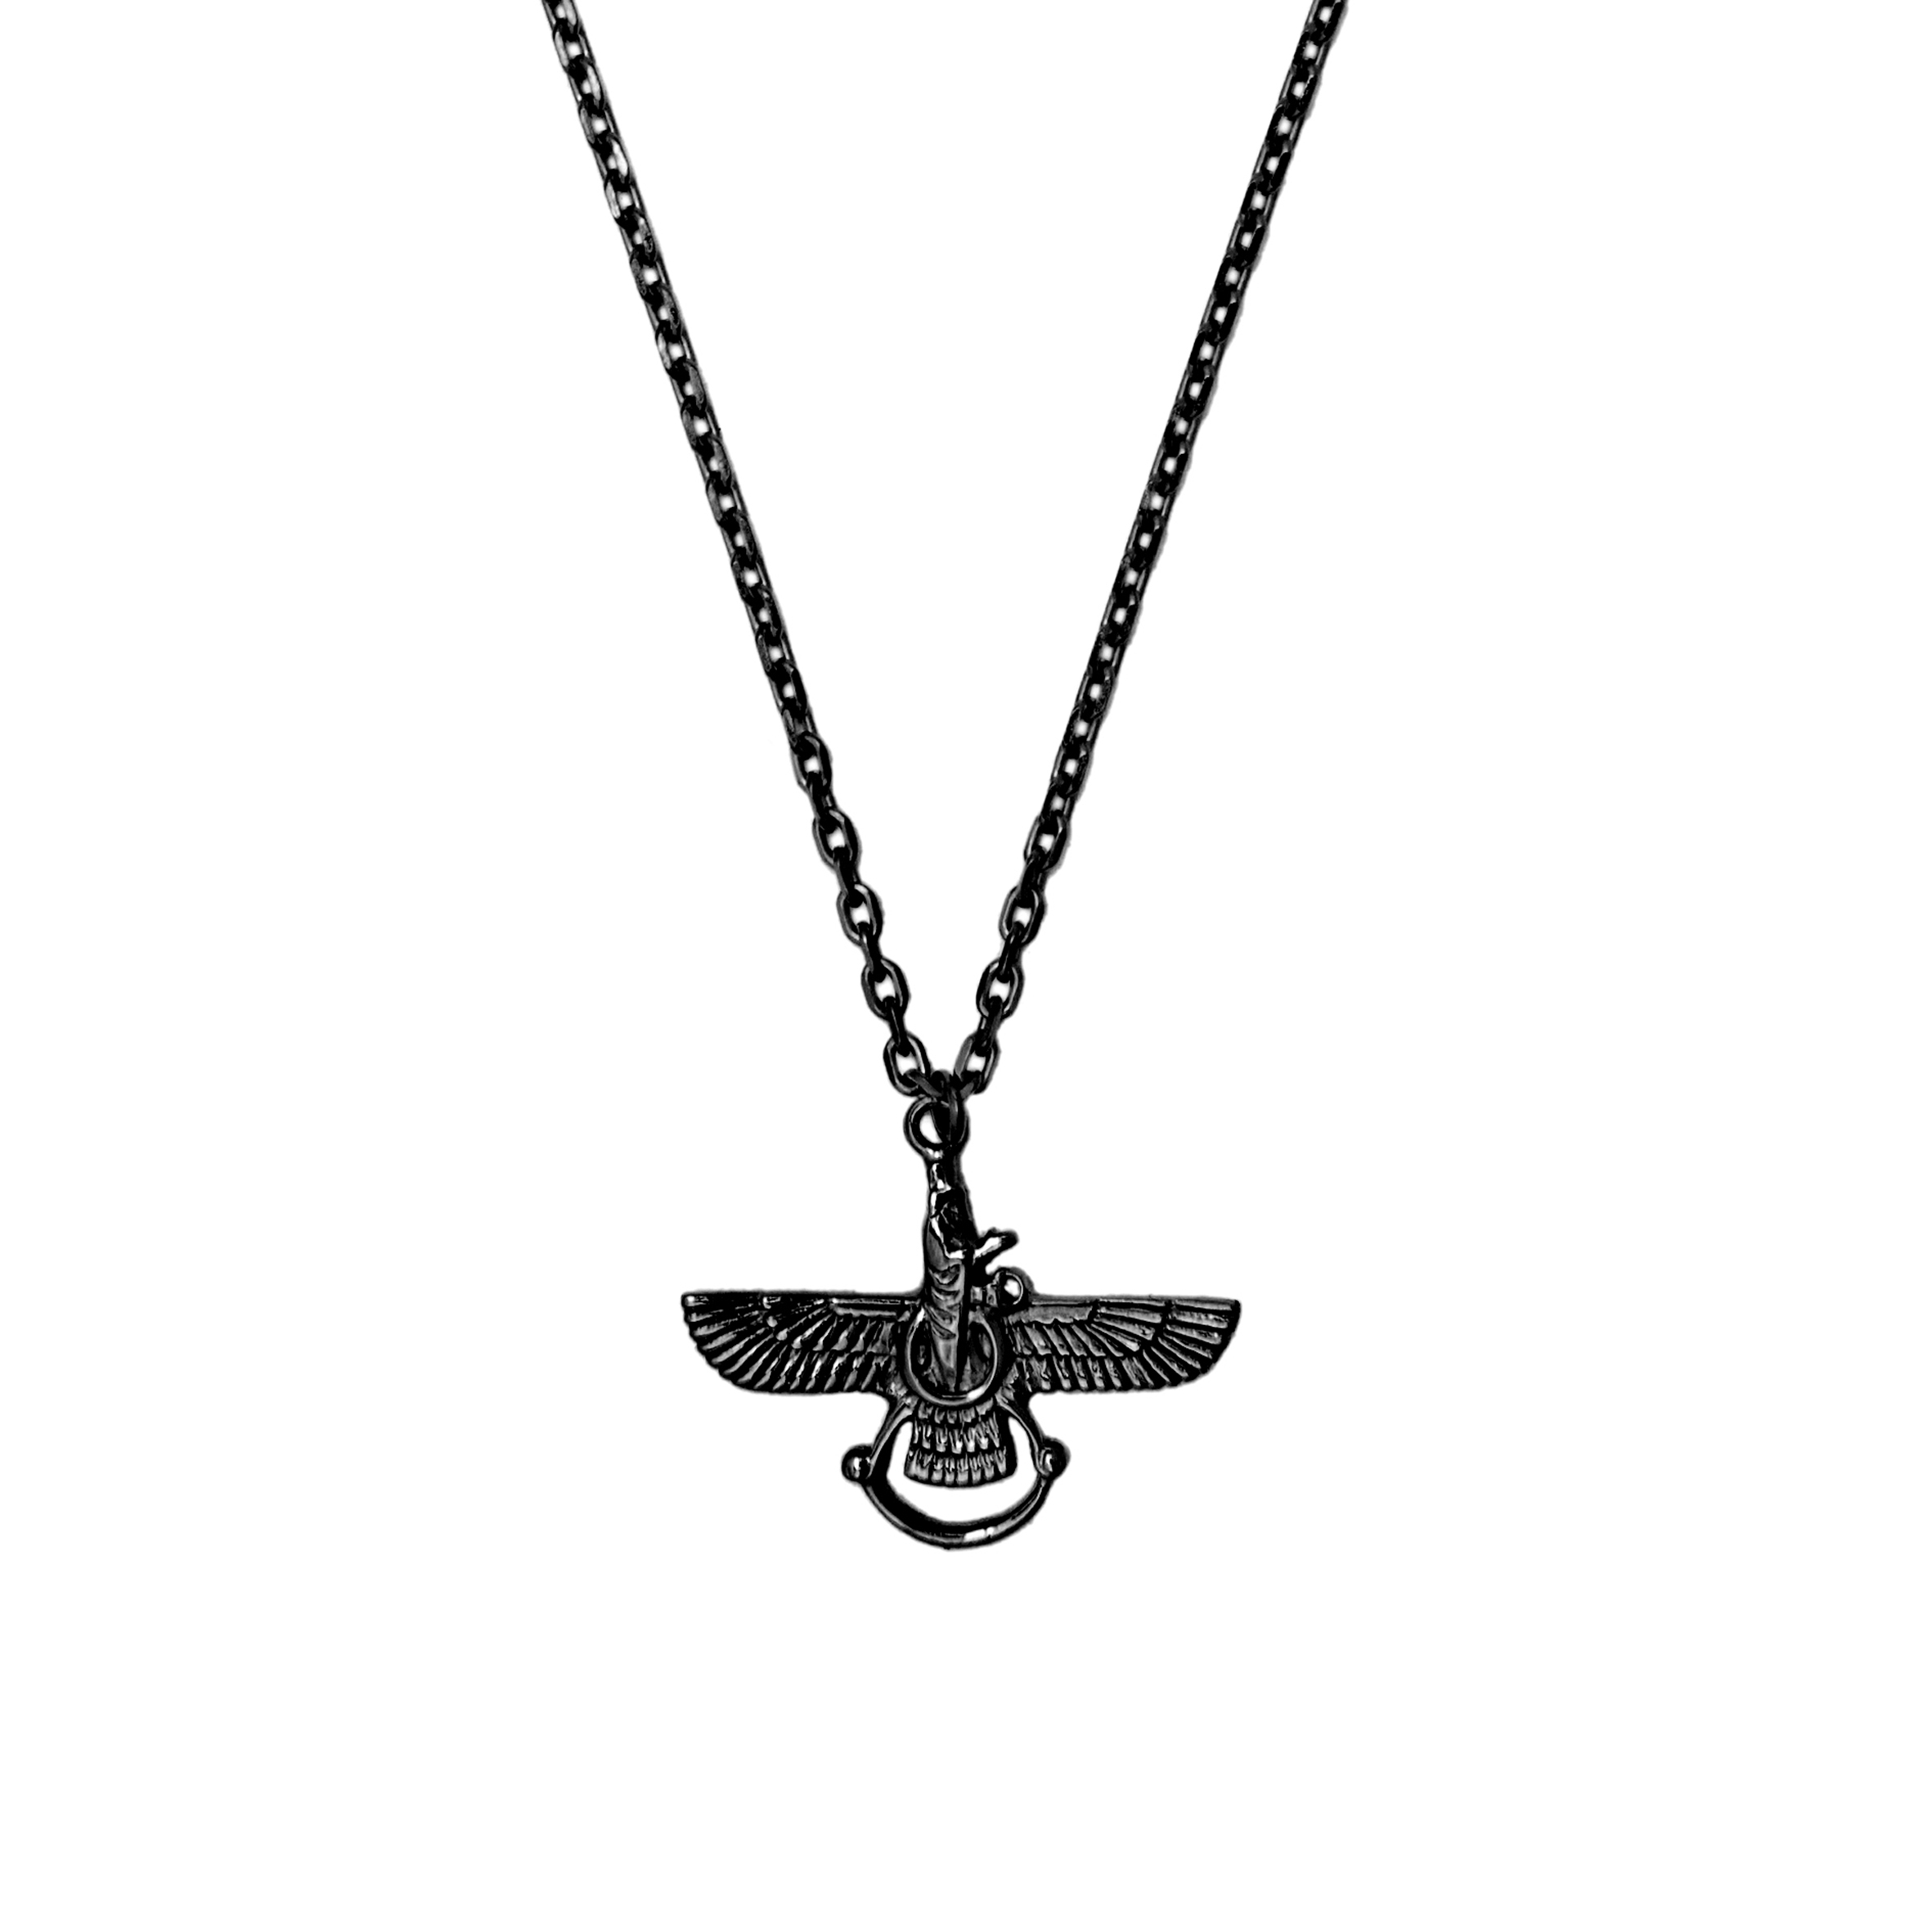 Farvahar necklace2 – black